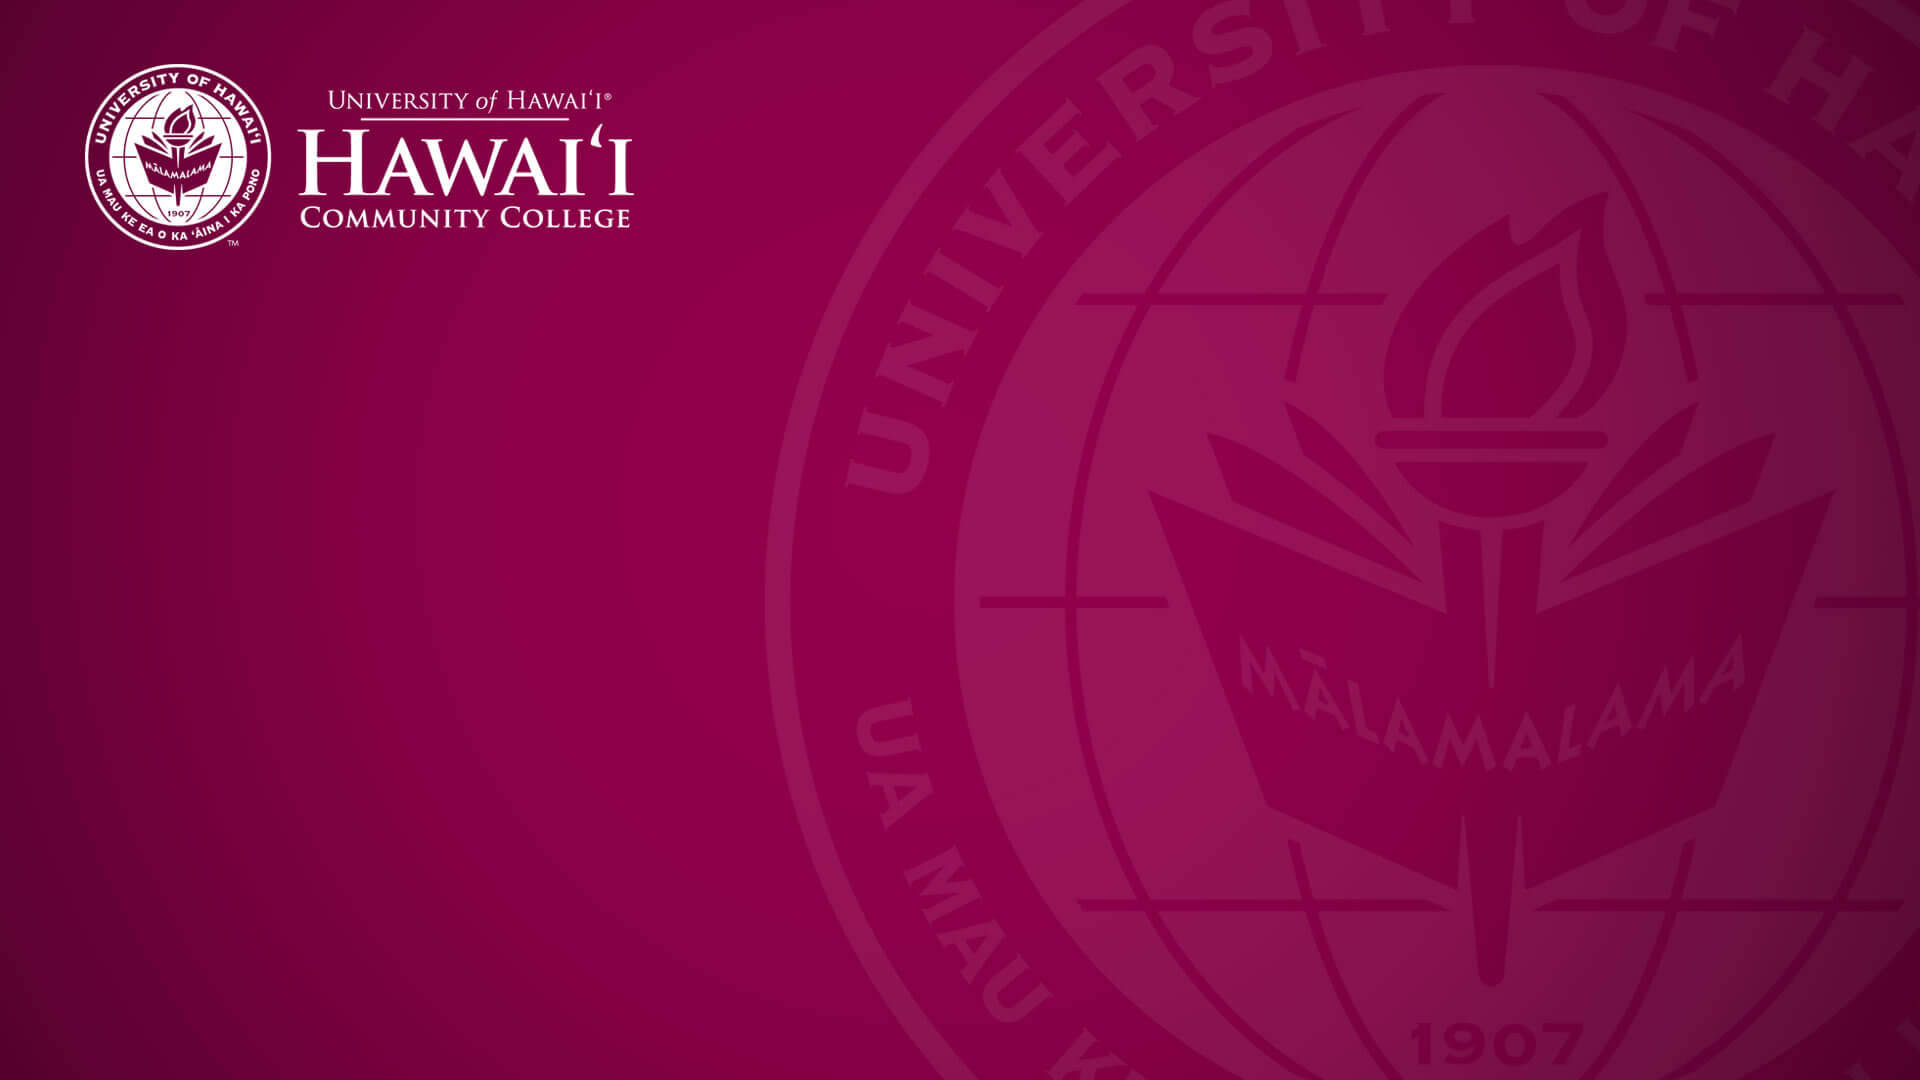 Universidadde Hawaii Community College Rojo Oscuro Fondo de pantalla